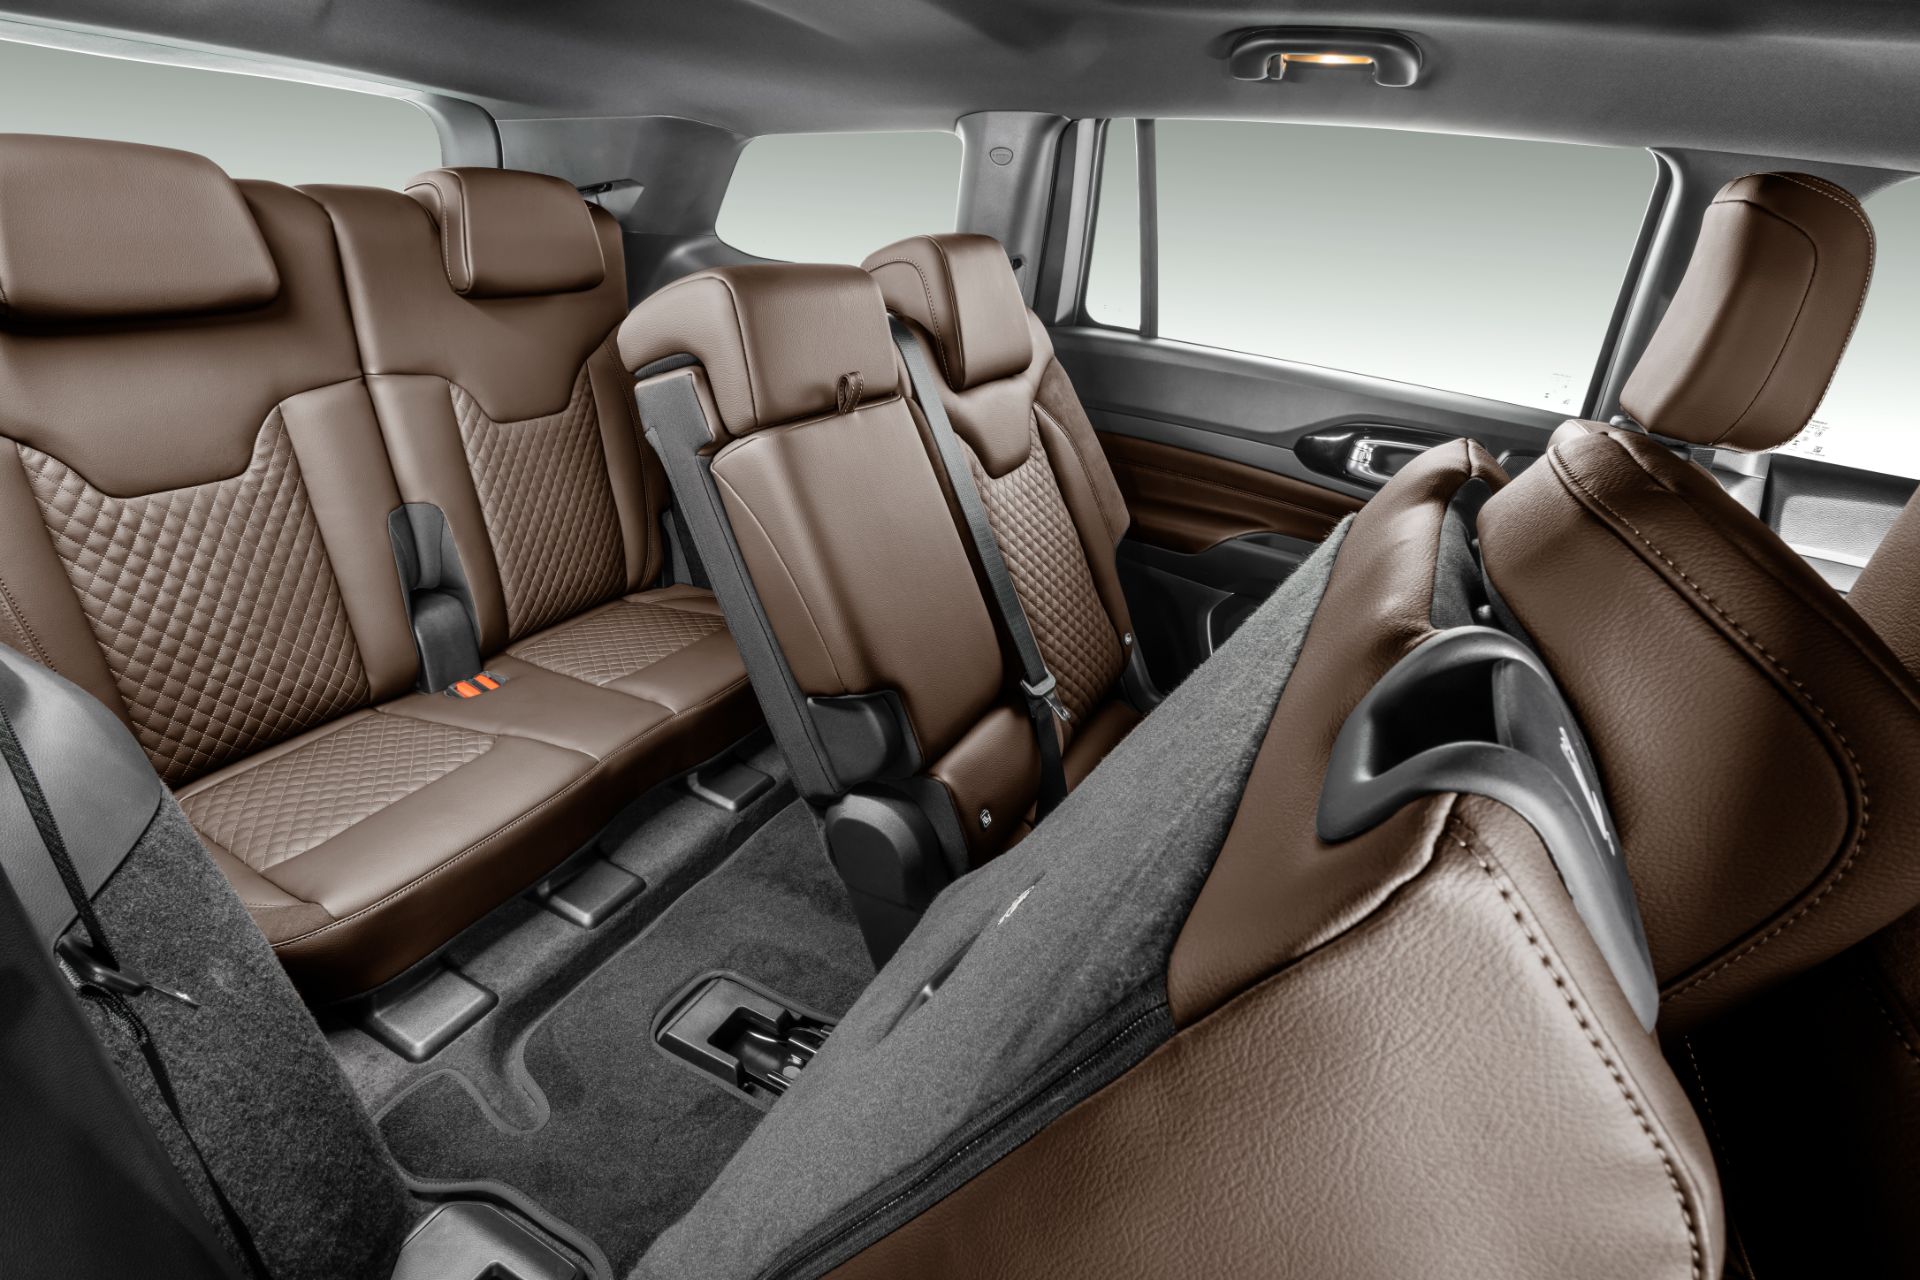 Jeep Commander interior - Seats